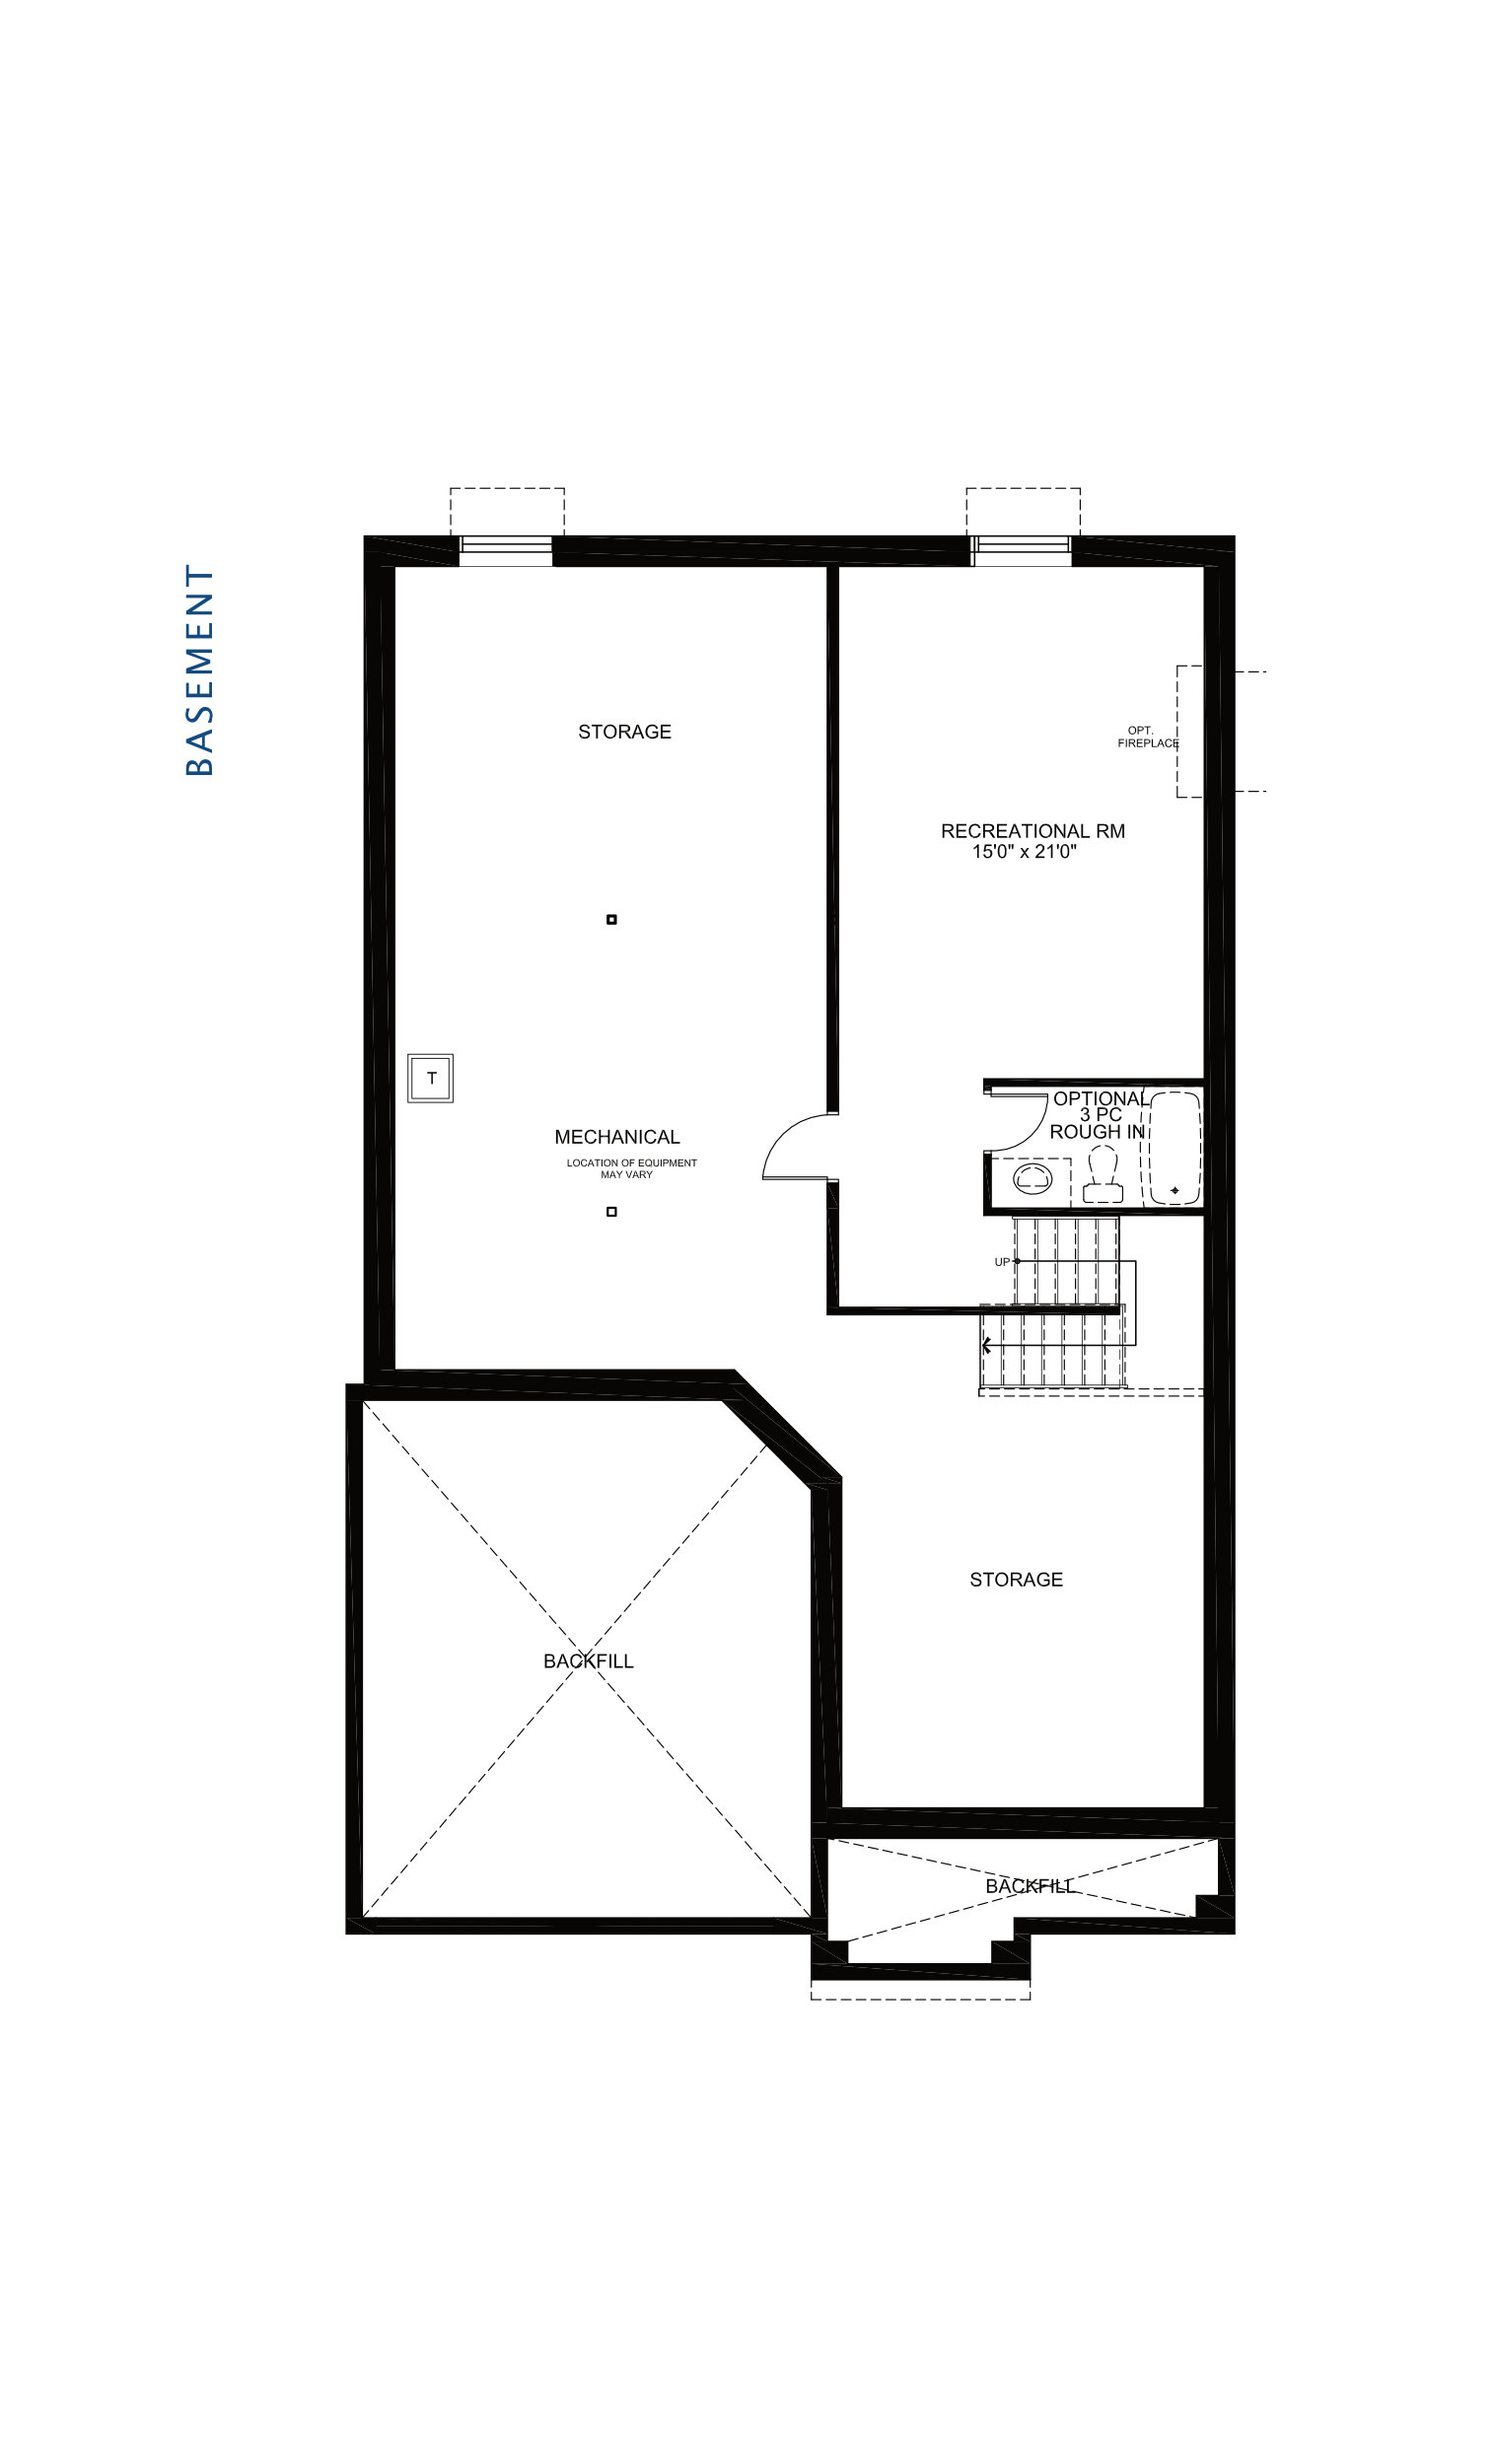 Floorplan Basement Level - Cambridge